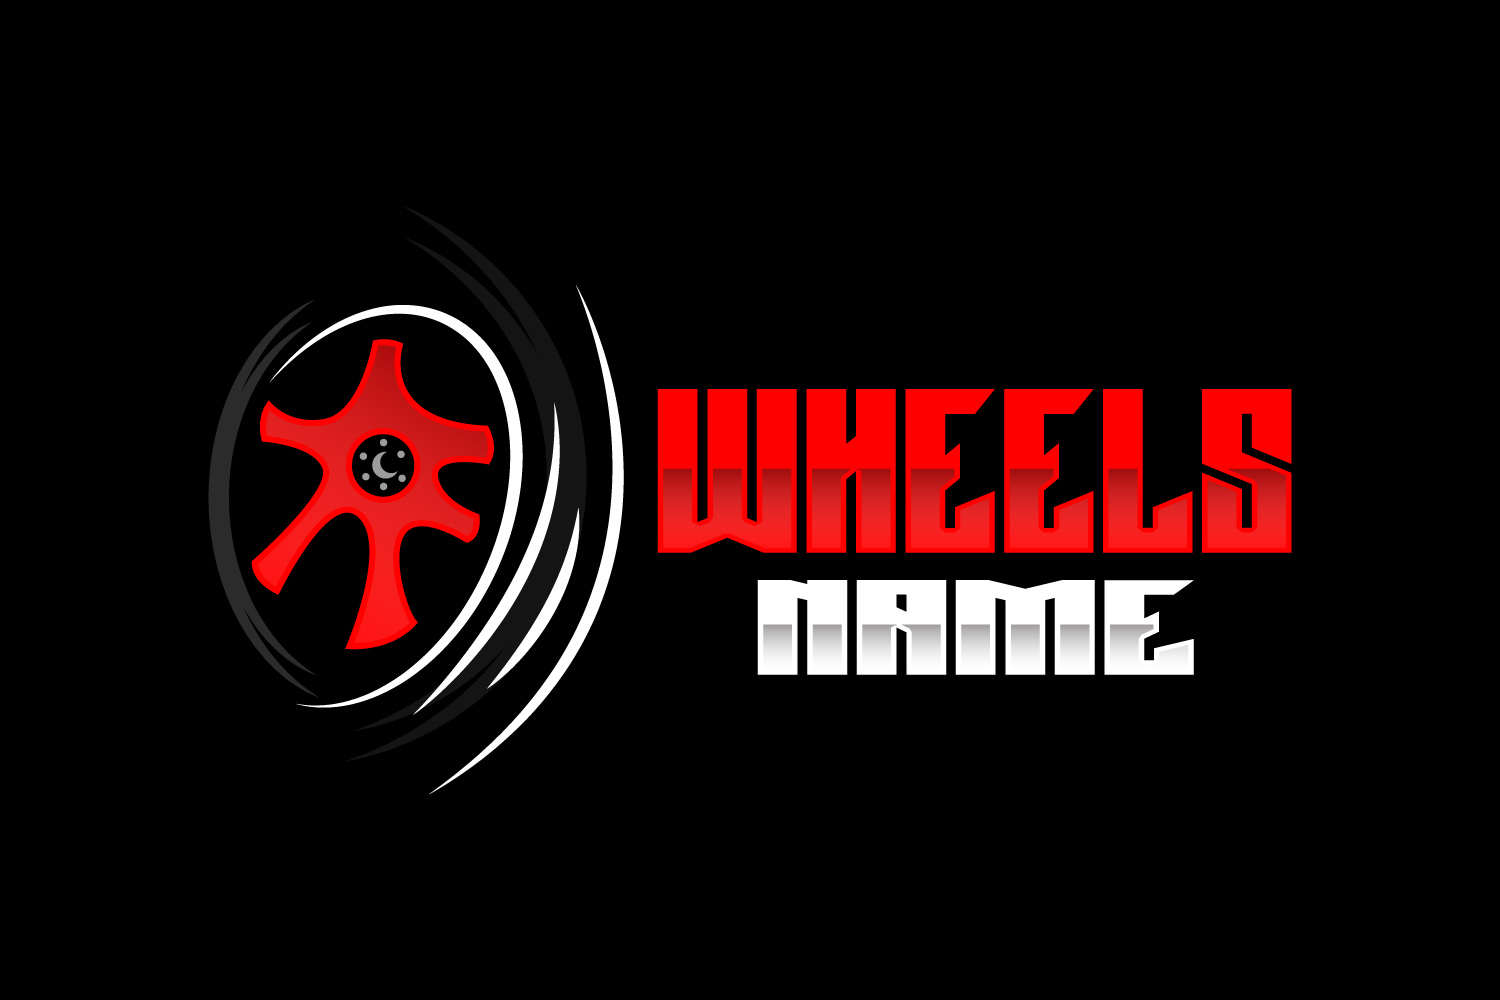 Vehicle Wheel Service Logo Automotive DesignV3